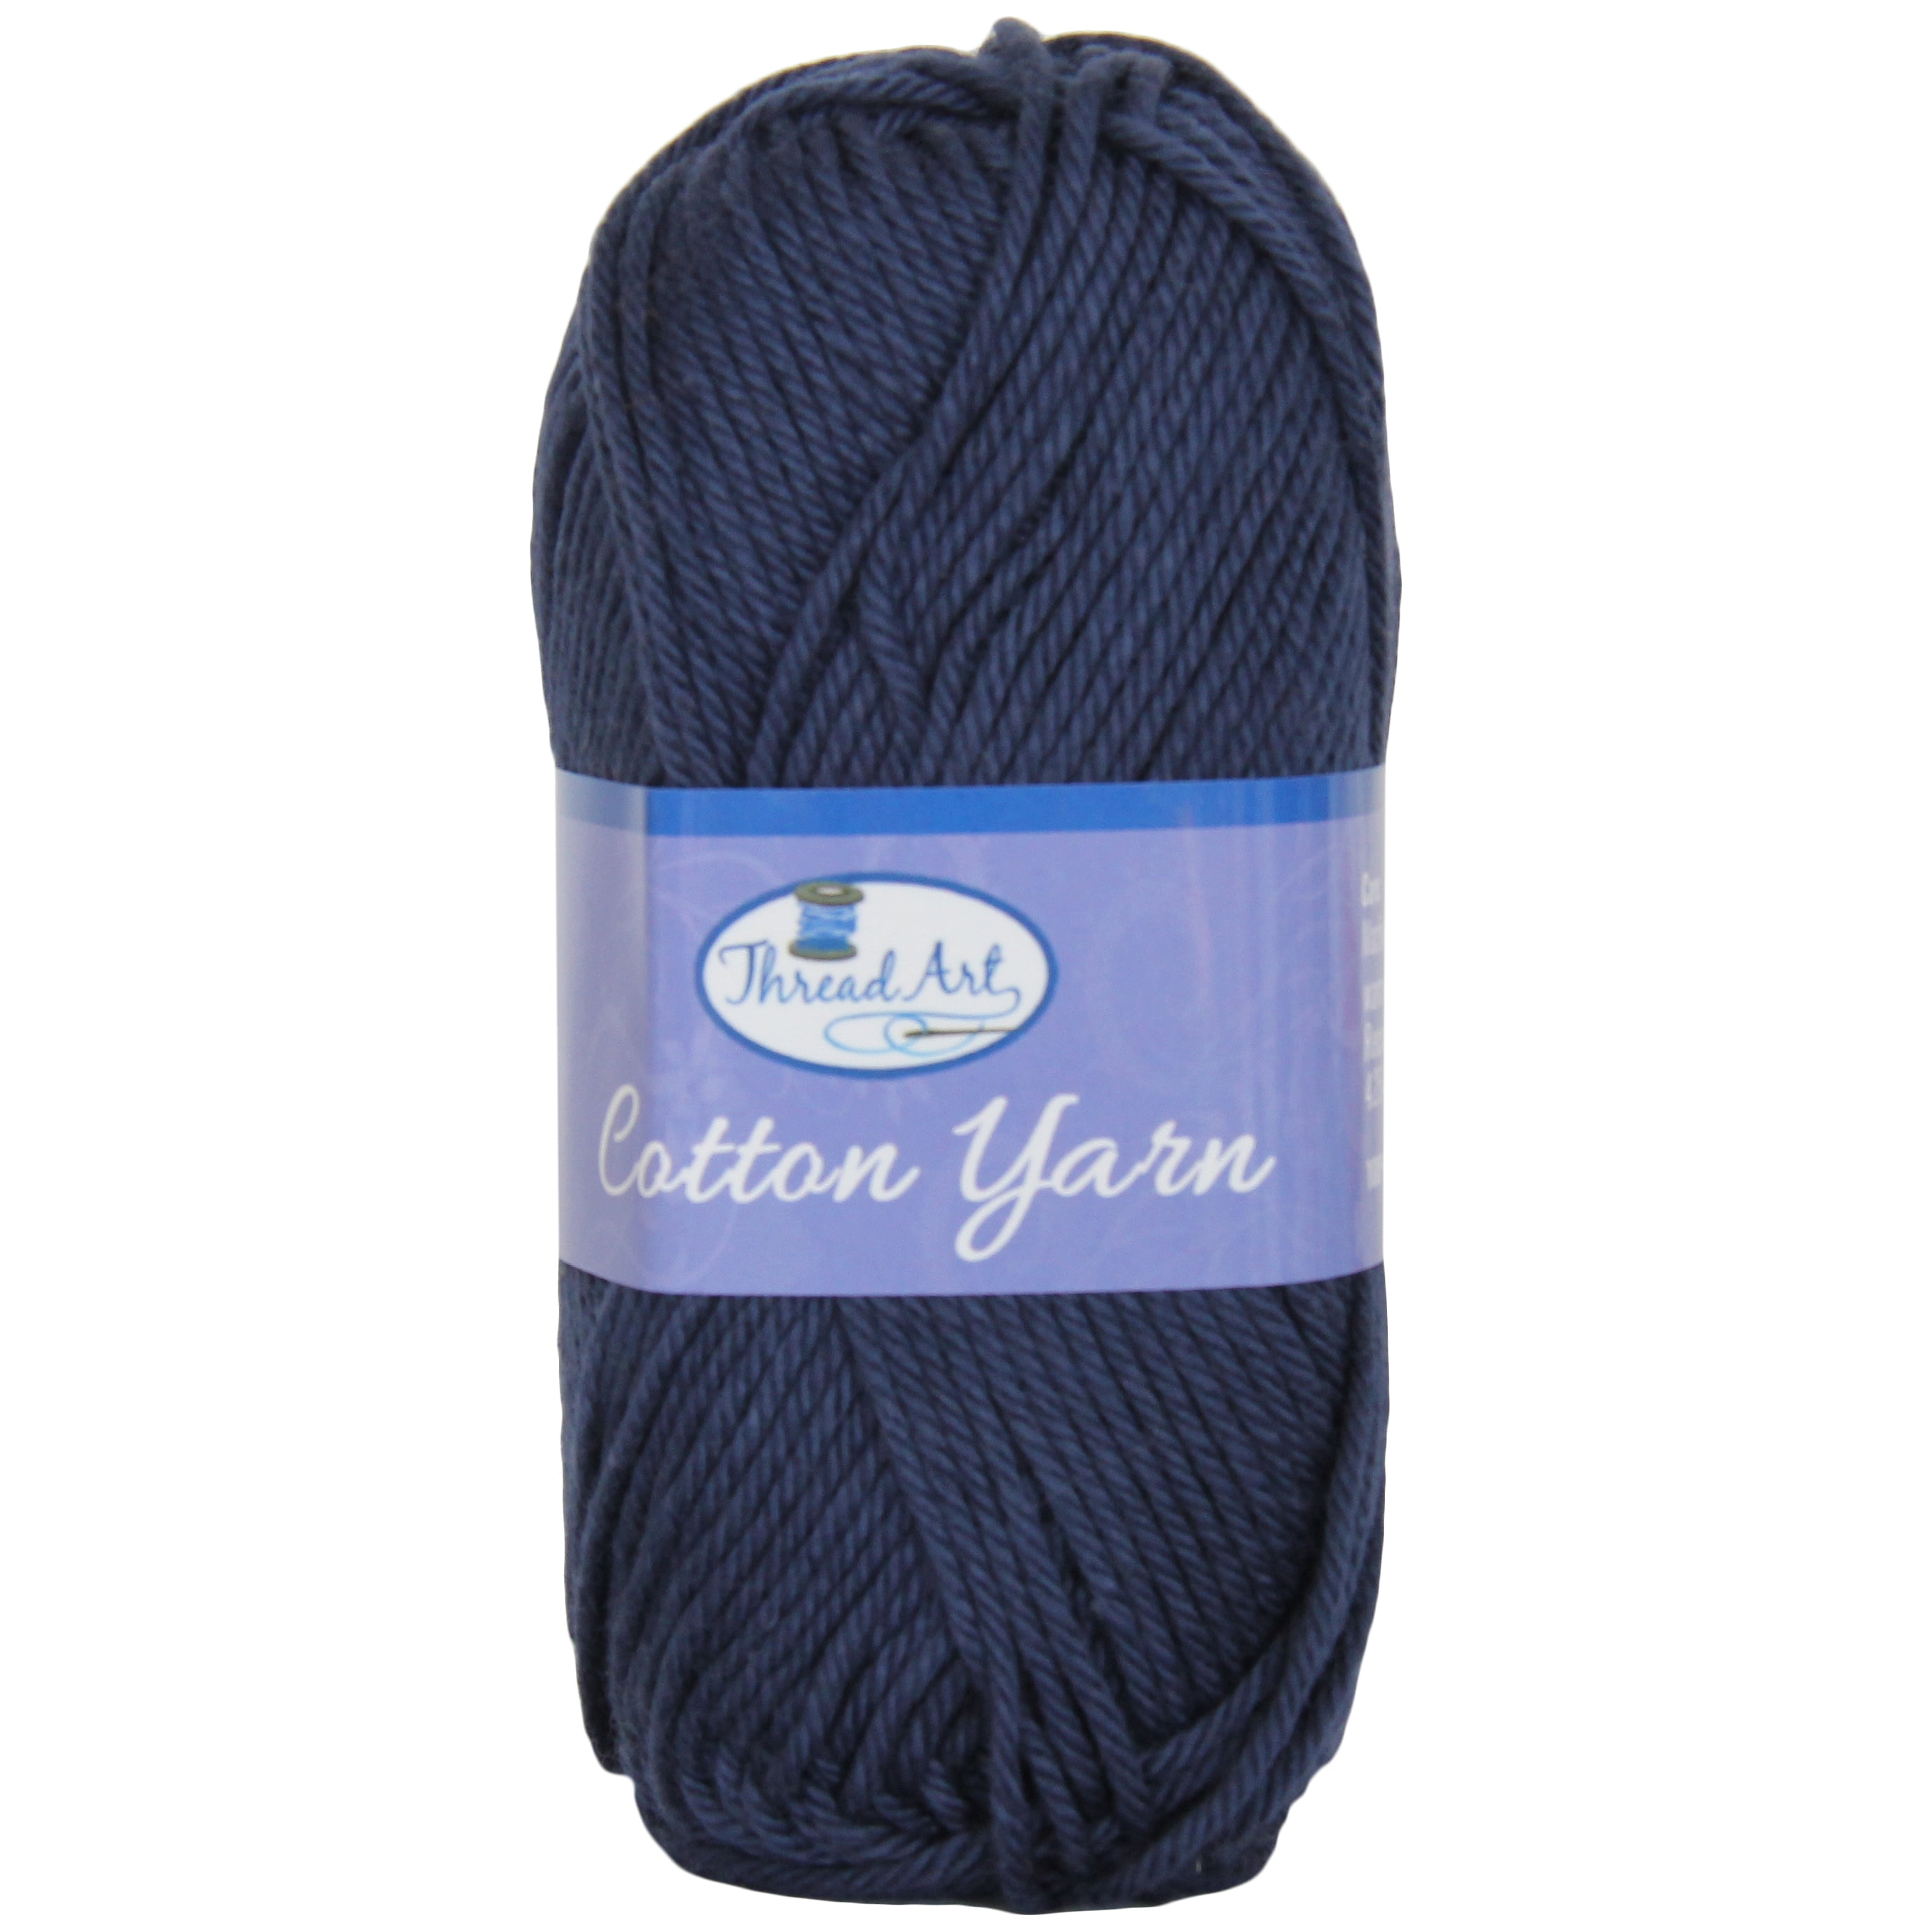 Sullivans Crochet and Knitting Yarn 4ply, Blue- 50g Cotton Yarn – Lincraft